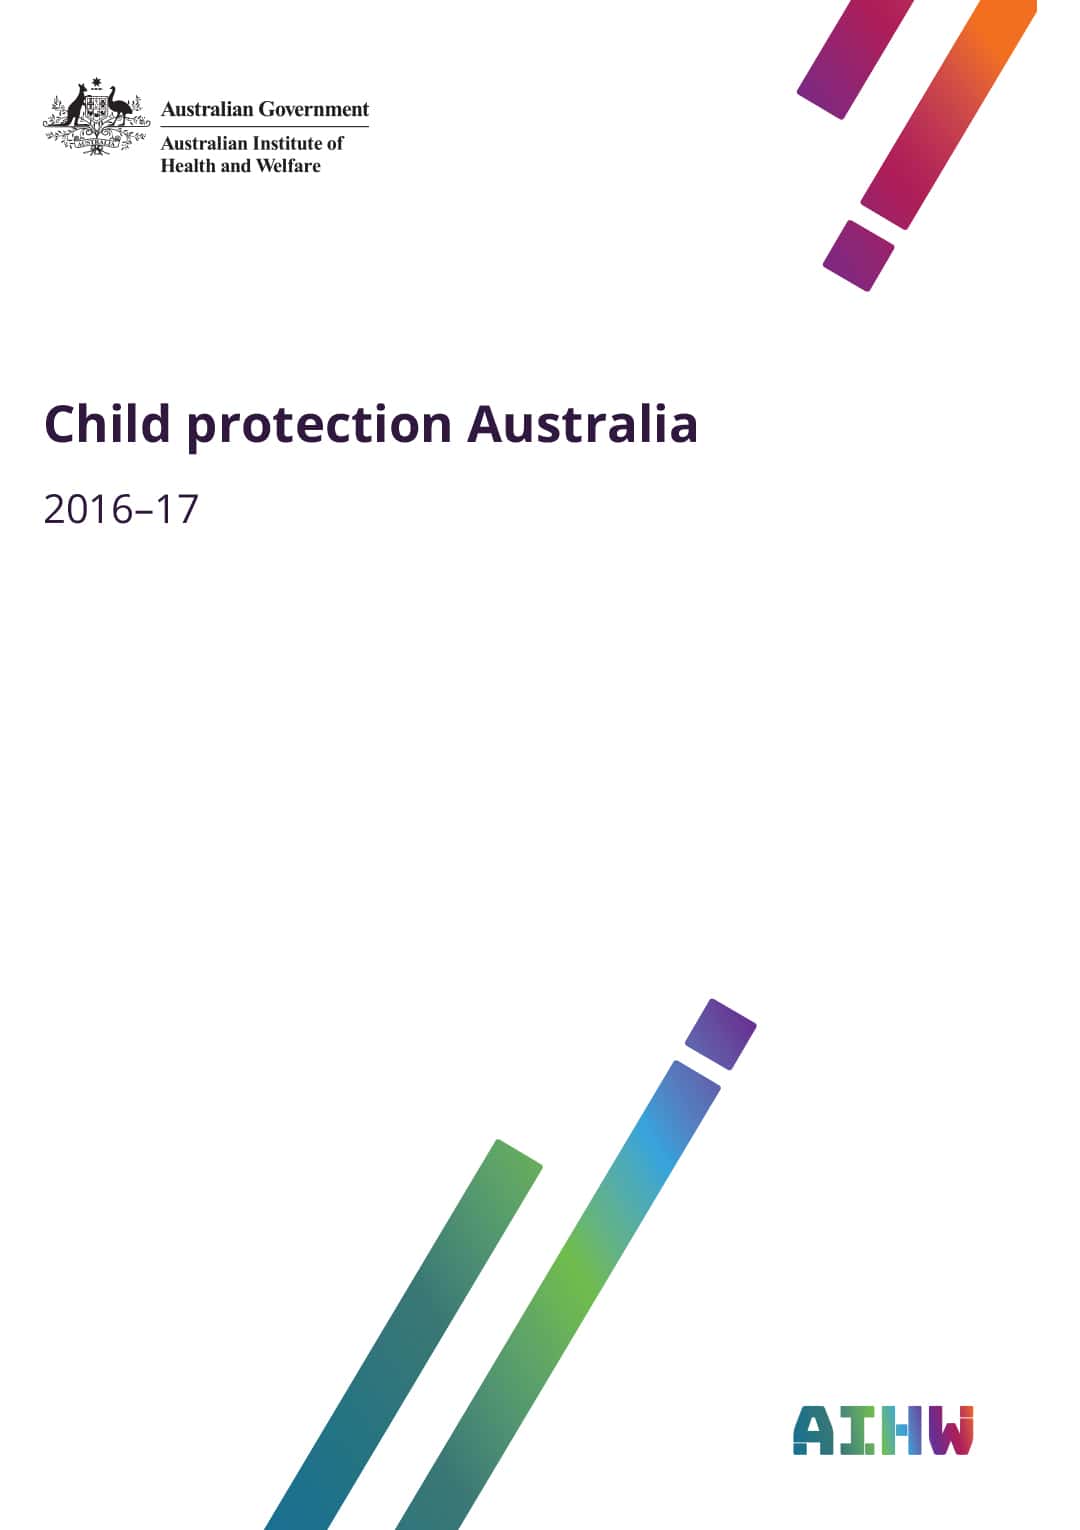 AIHW Child protection Australia 2016-17 Report